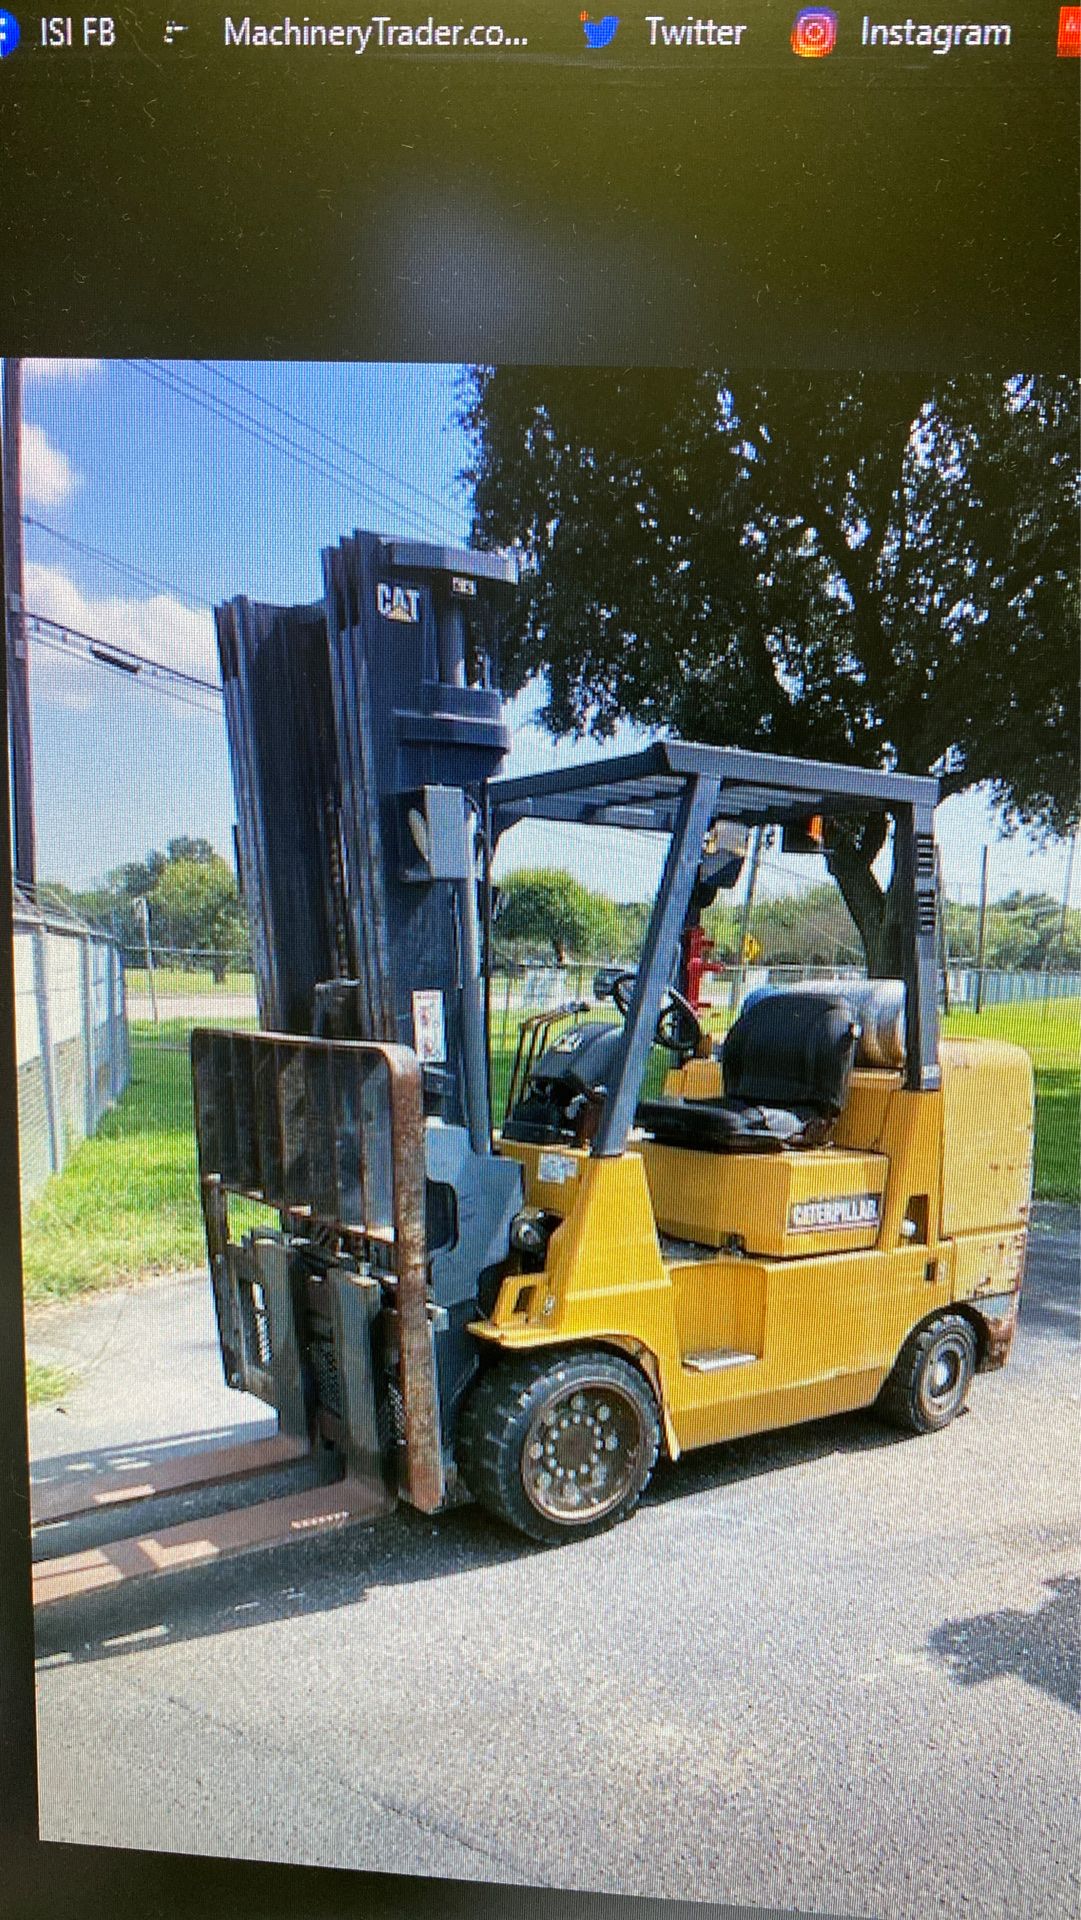 Caterpillar GC45KS1 10,000 # Capacity SS 3S Forklift $11,000 obo